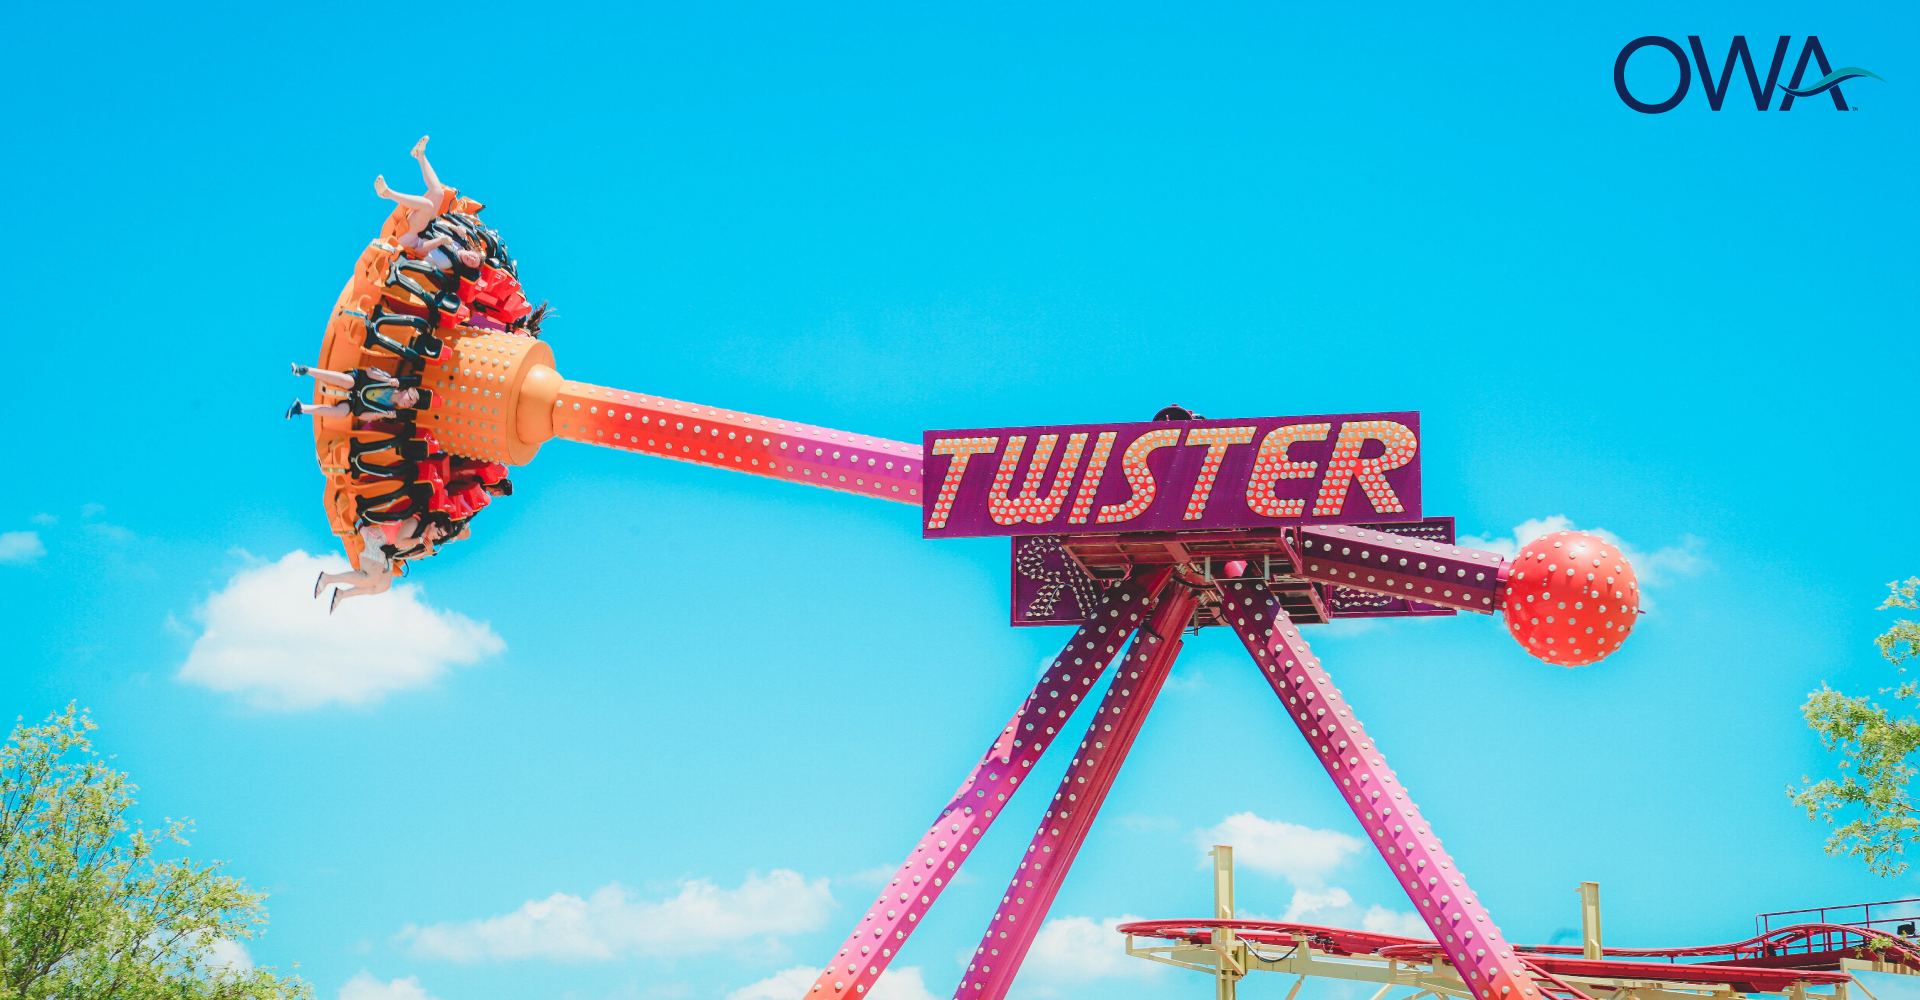 Twister Amusement Ride Park at OWA, Foley AL